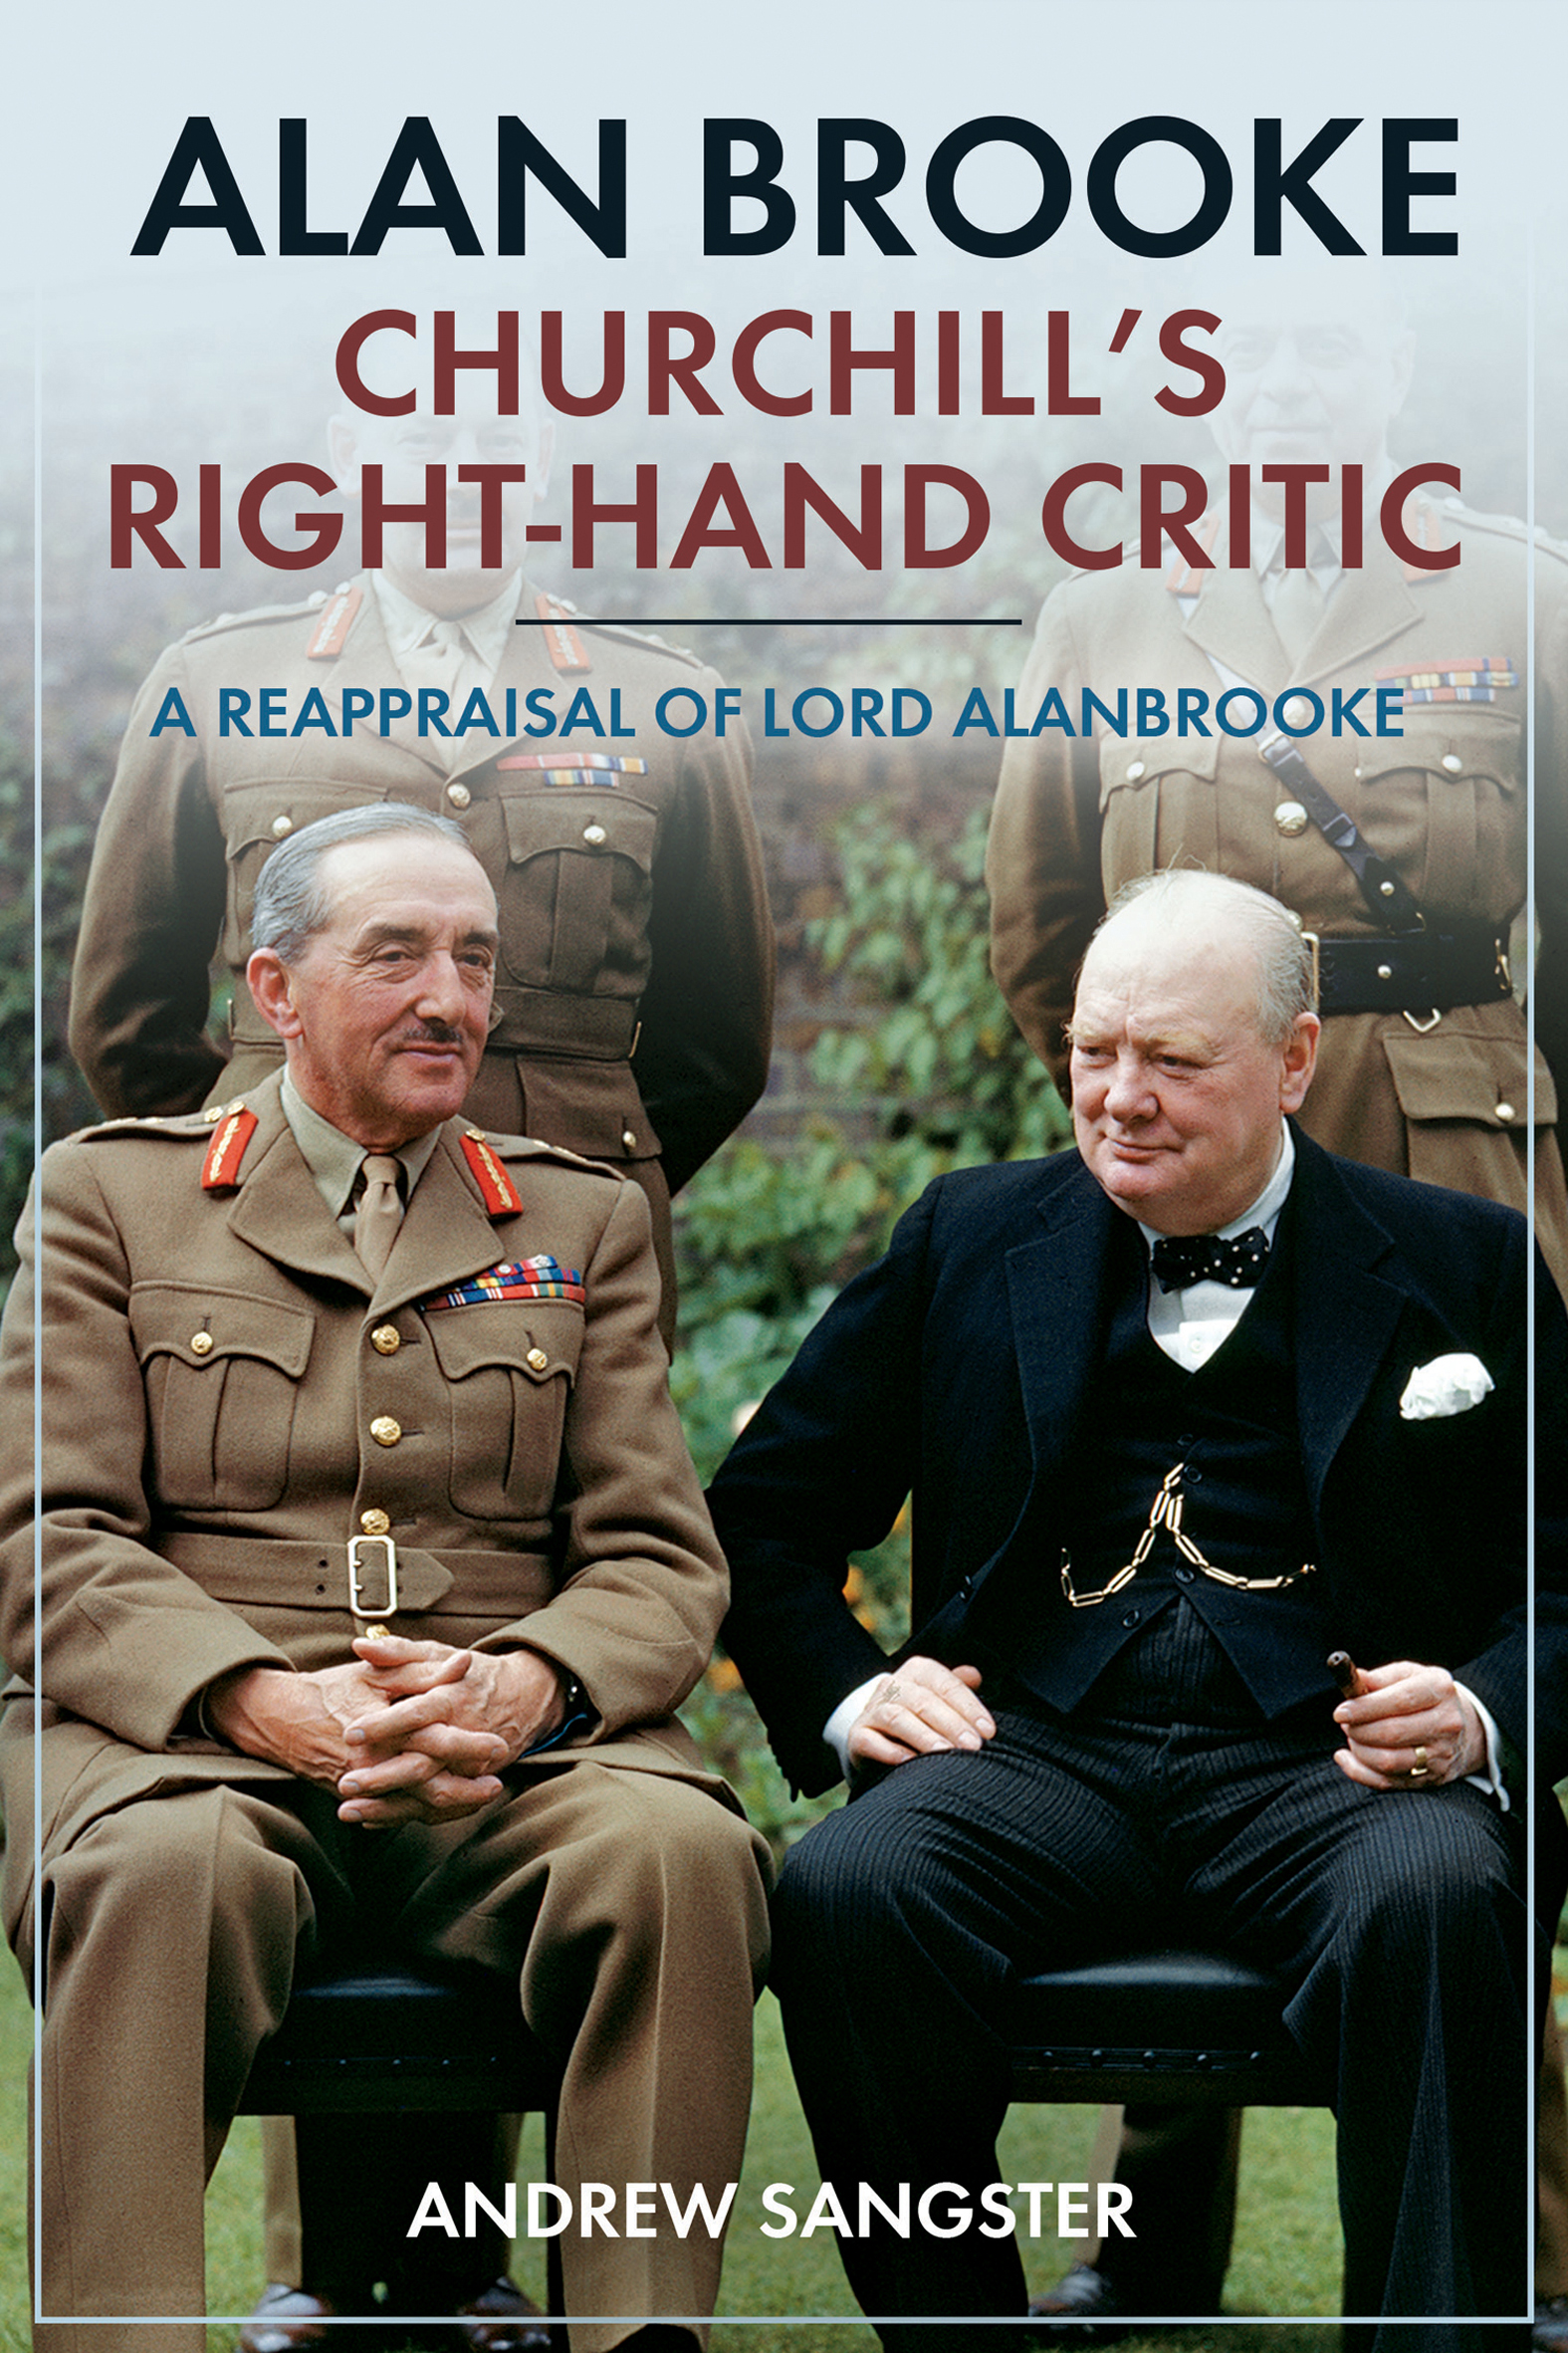 Alan Brooke-Churchill's Right-Hand Critic